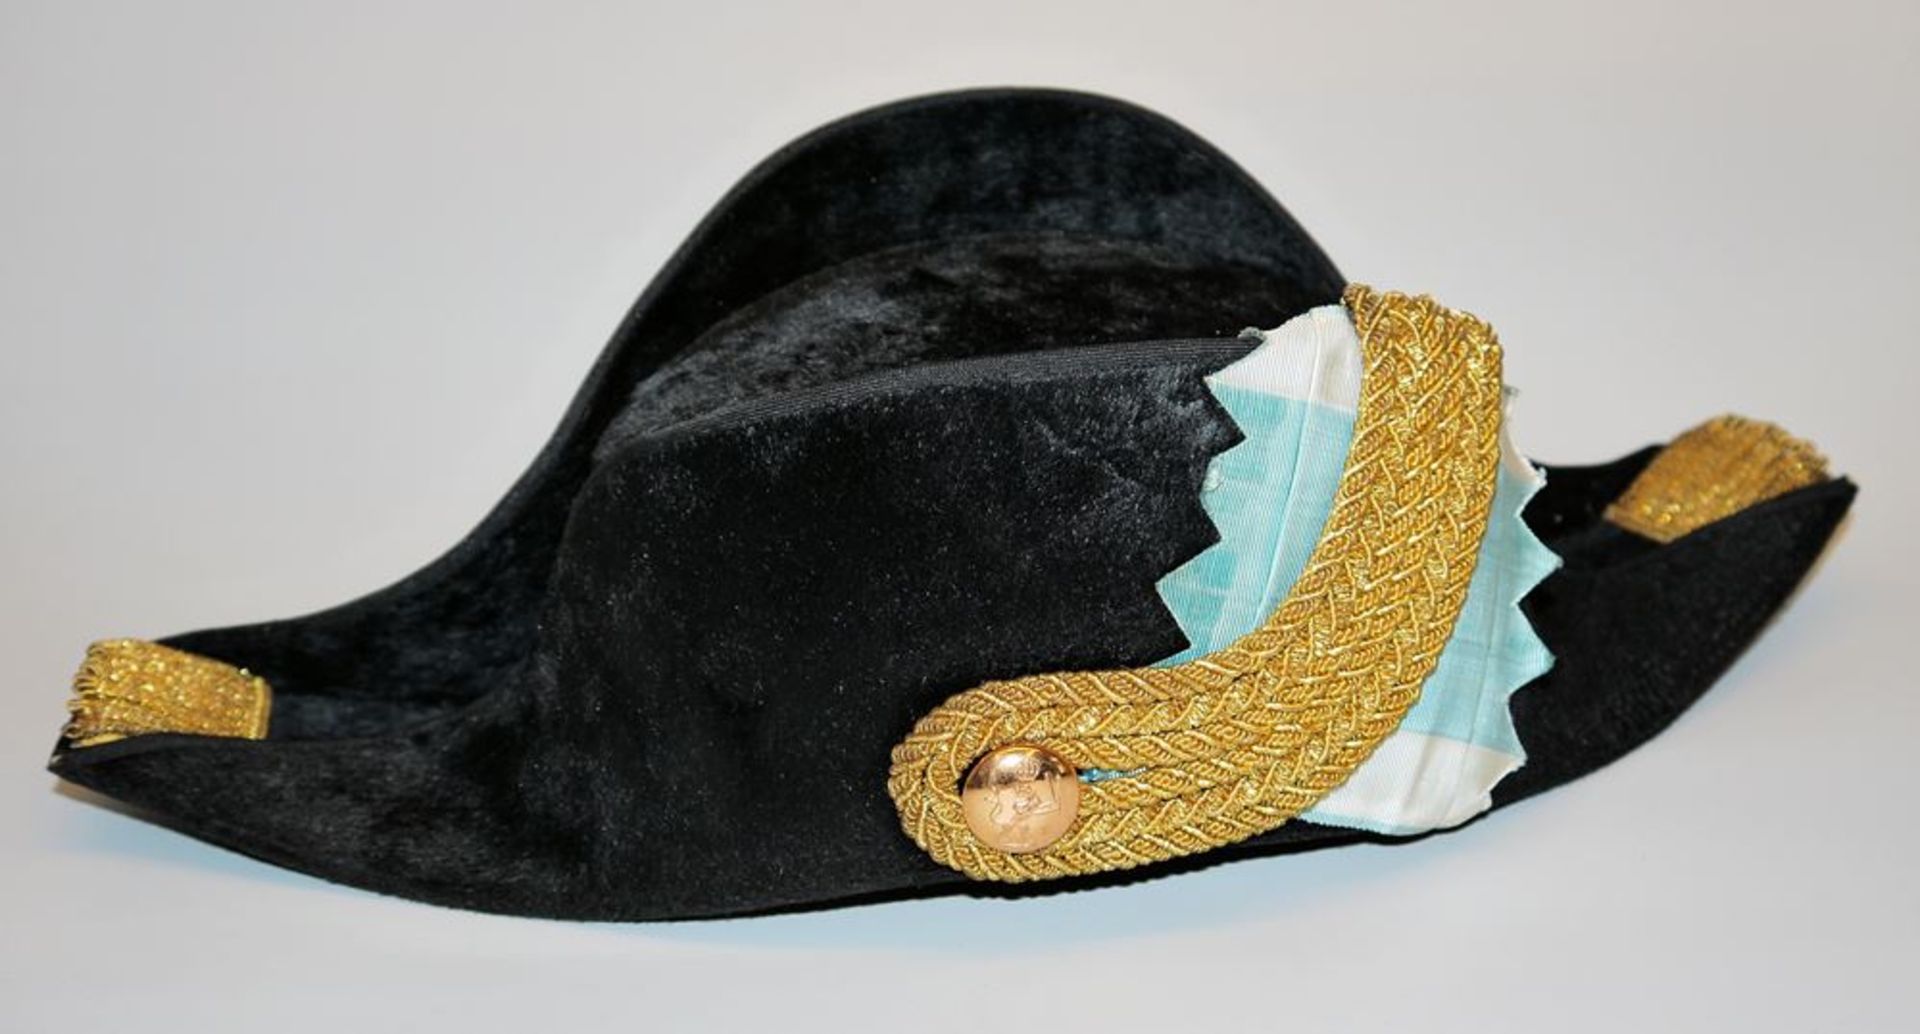 Bavarian civil servant's two-cornered hat circa 1900 - Image 2 of 3